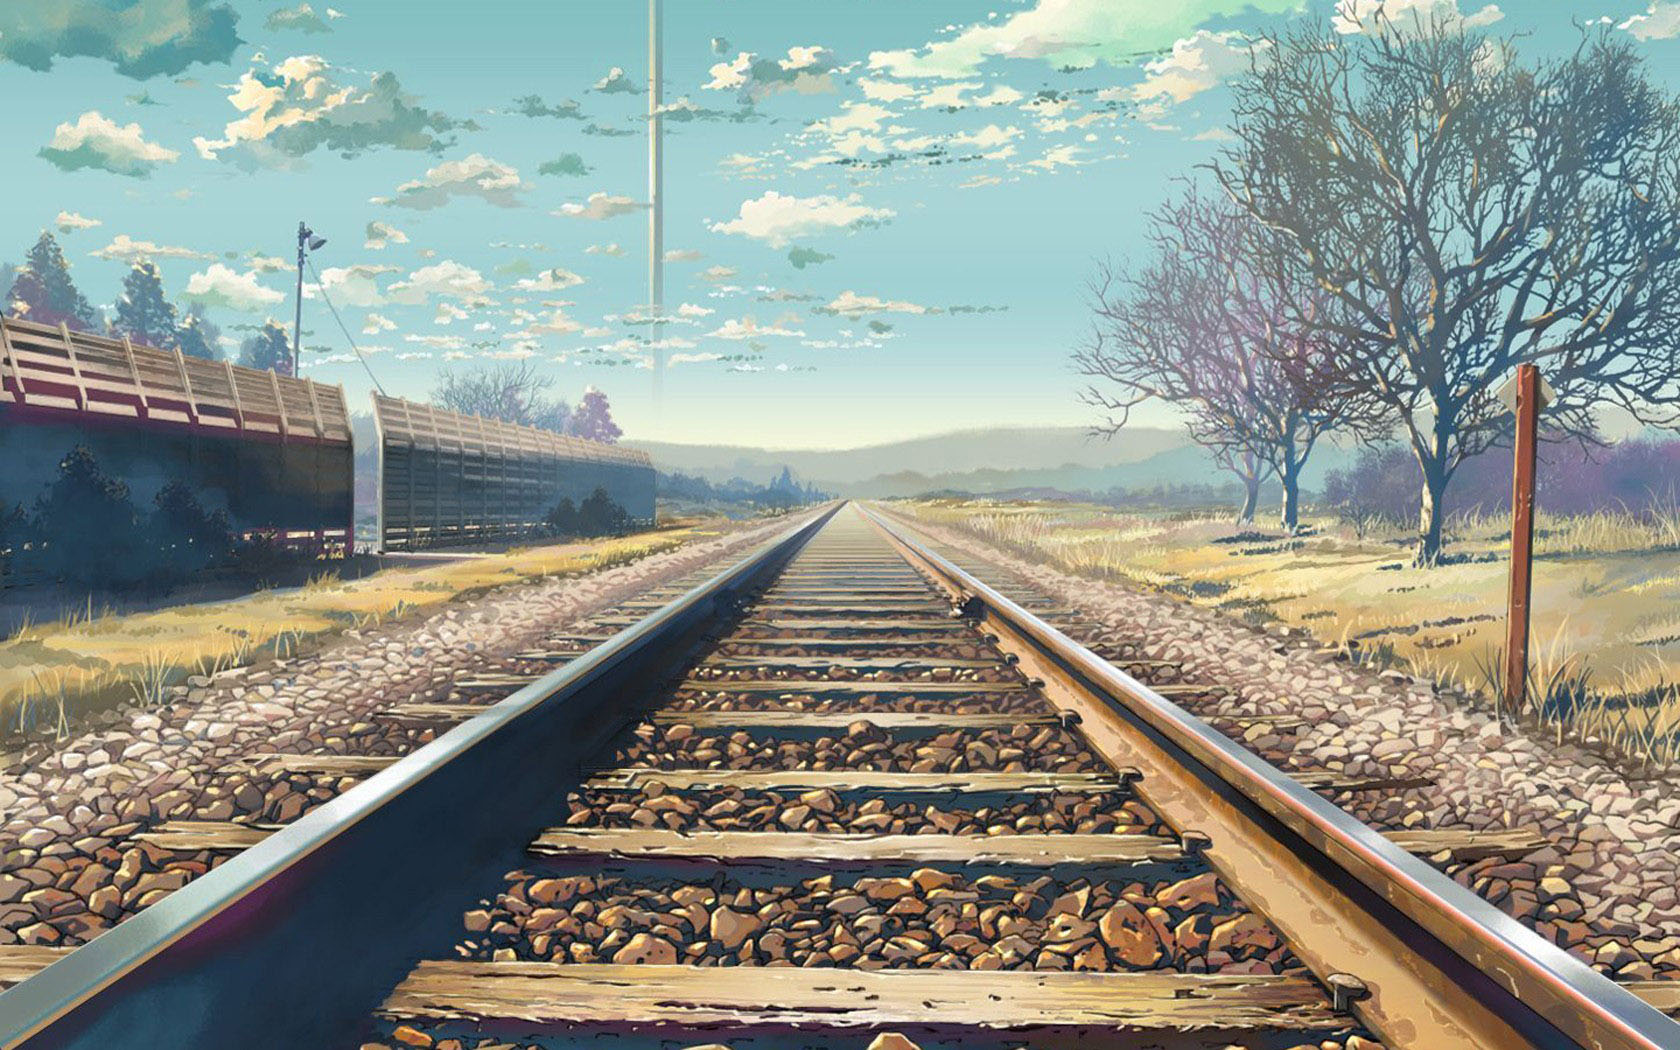 Good-looking hand-painted railway scenery wallpaper